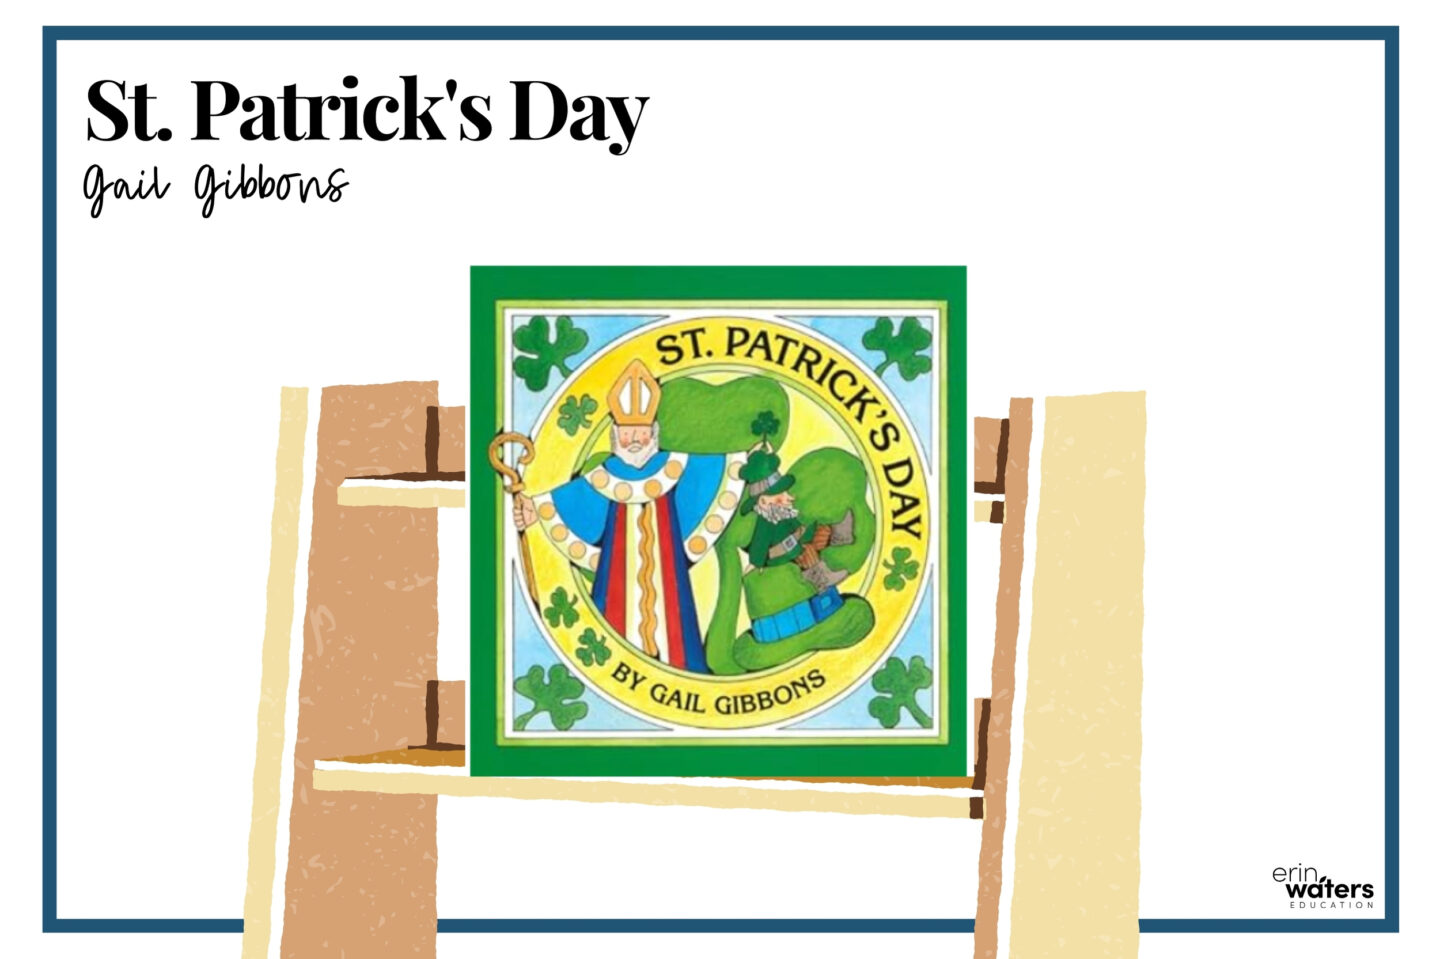 st. patrick's day books blog post image depicting the cover image of "St. Patrick's Day" on a bookshelf